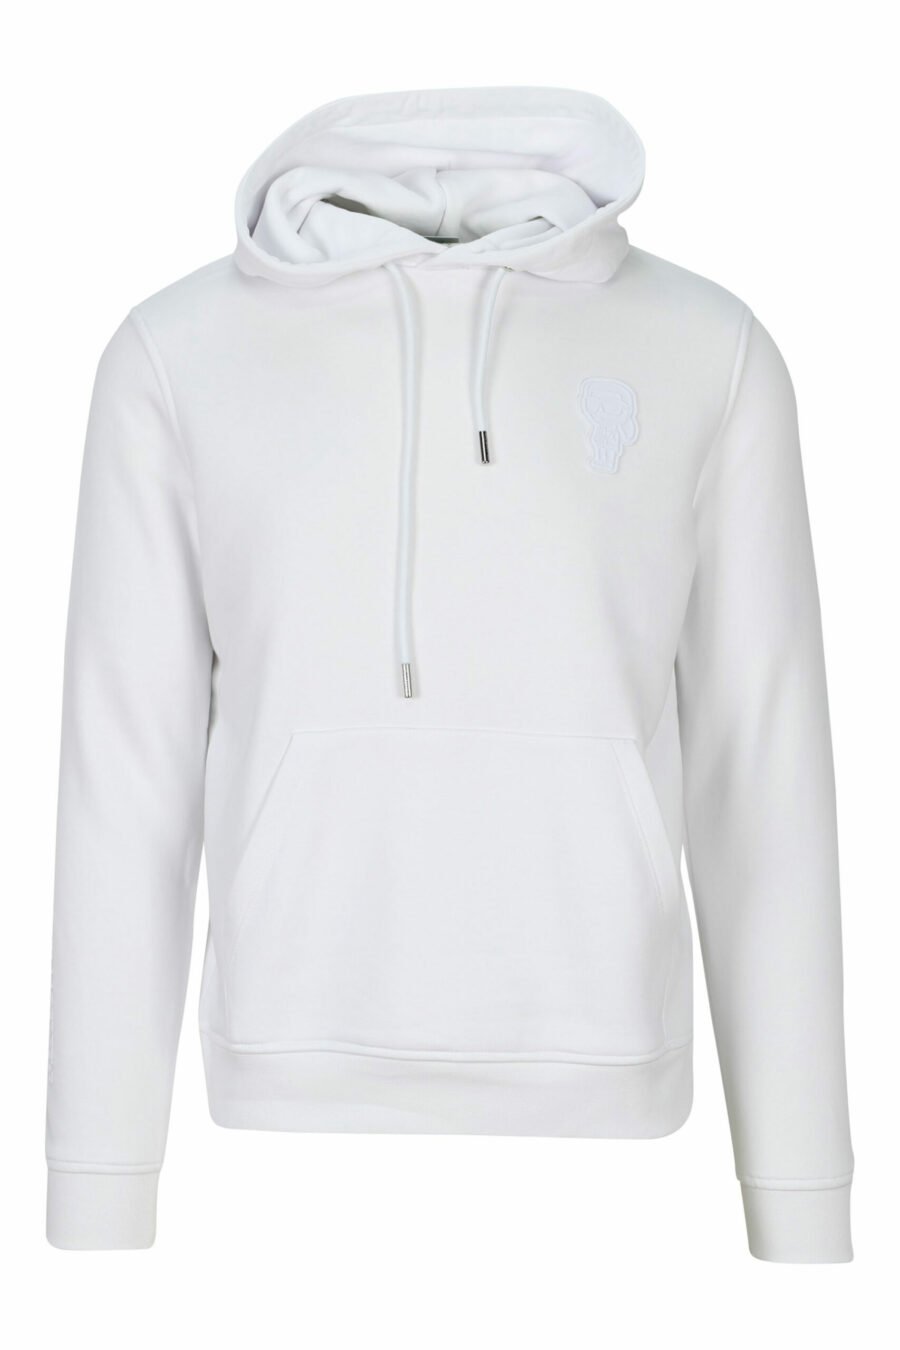 White hooded sweatshirt with monochrome rubber mini-logo - 4062226393331 scaled